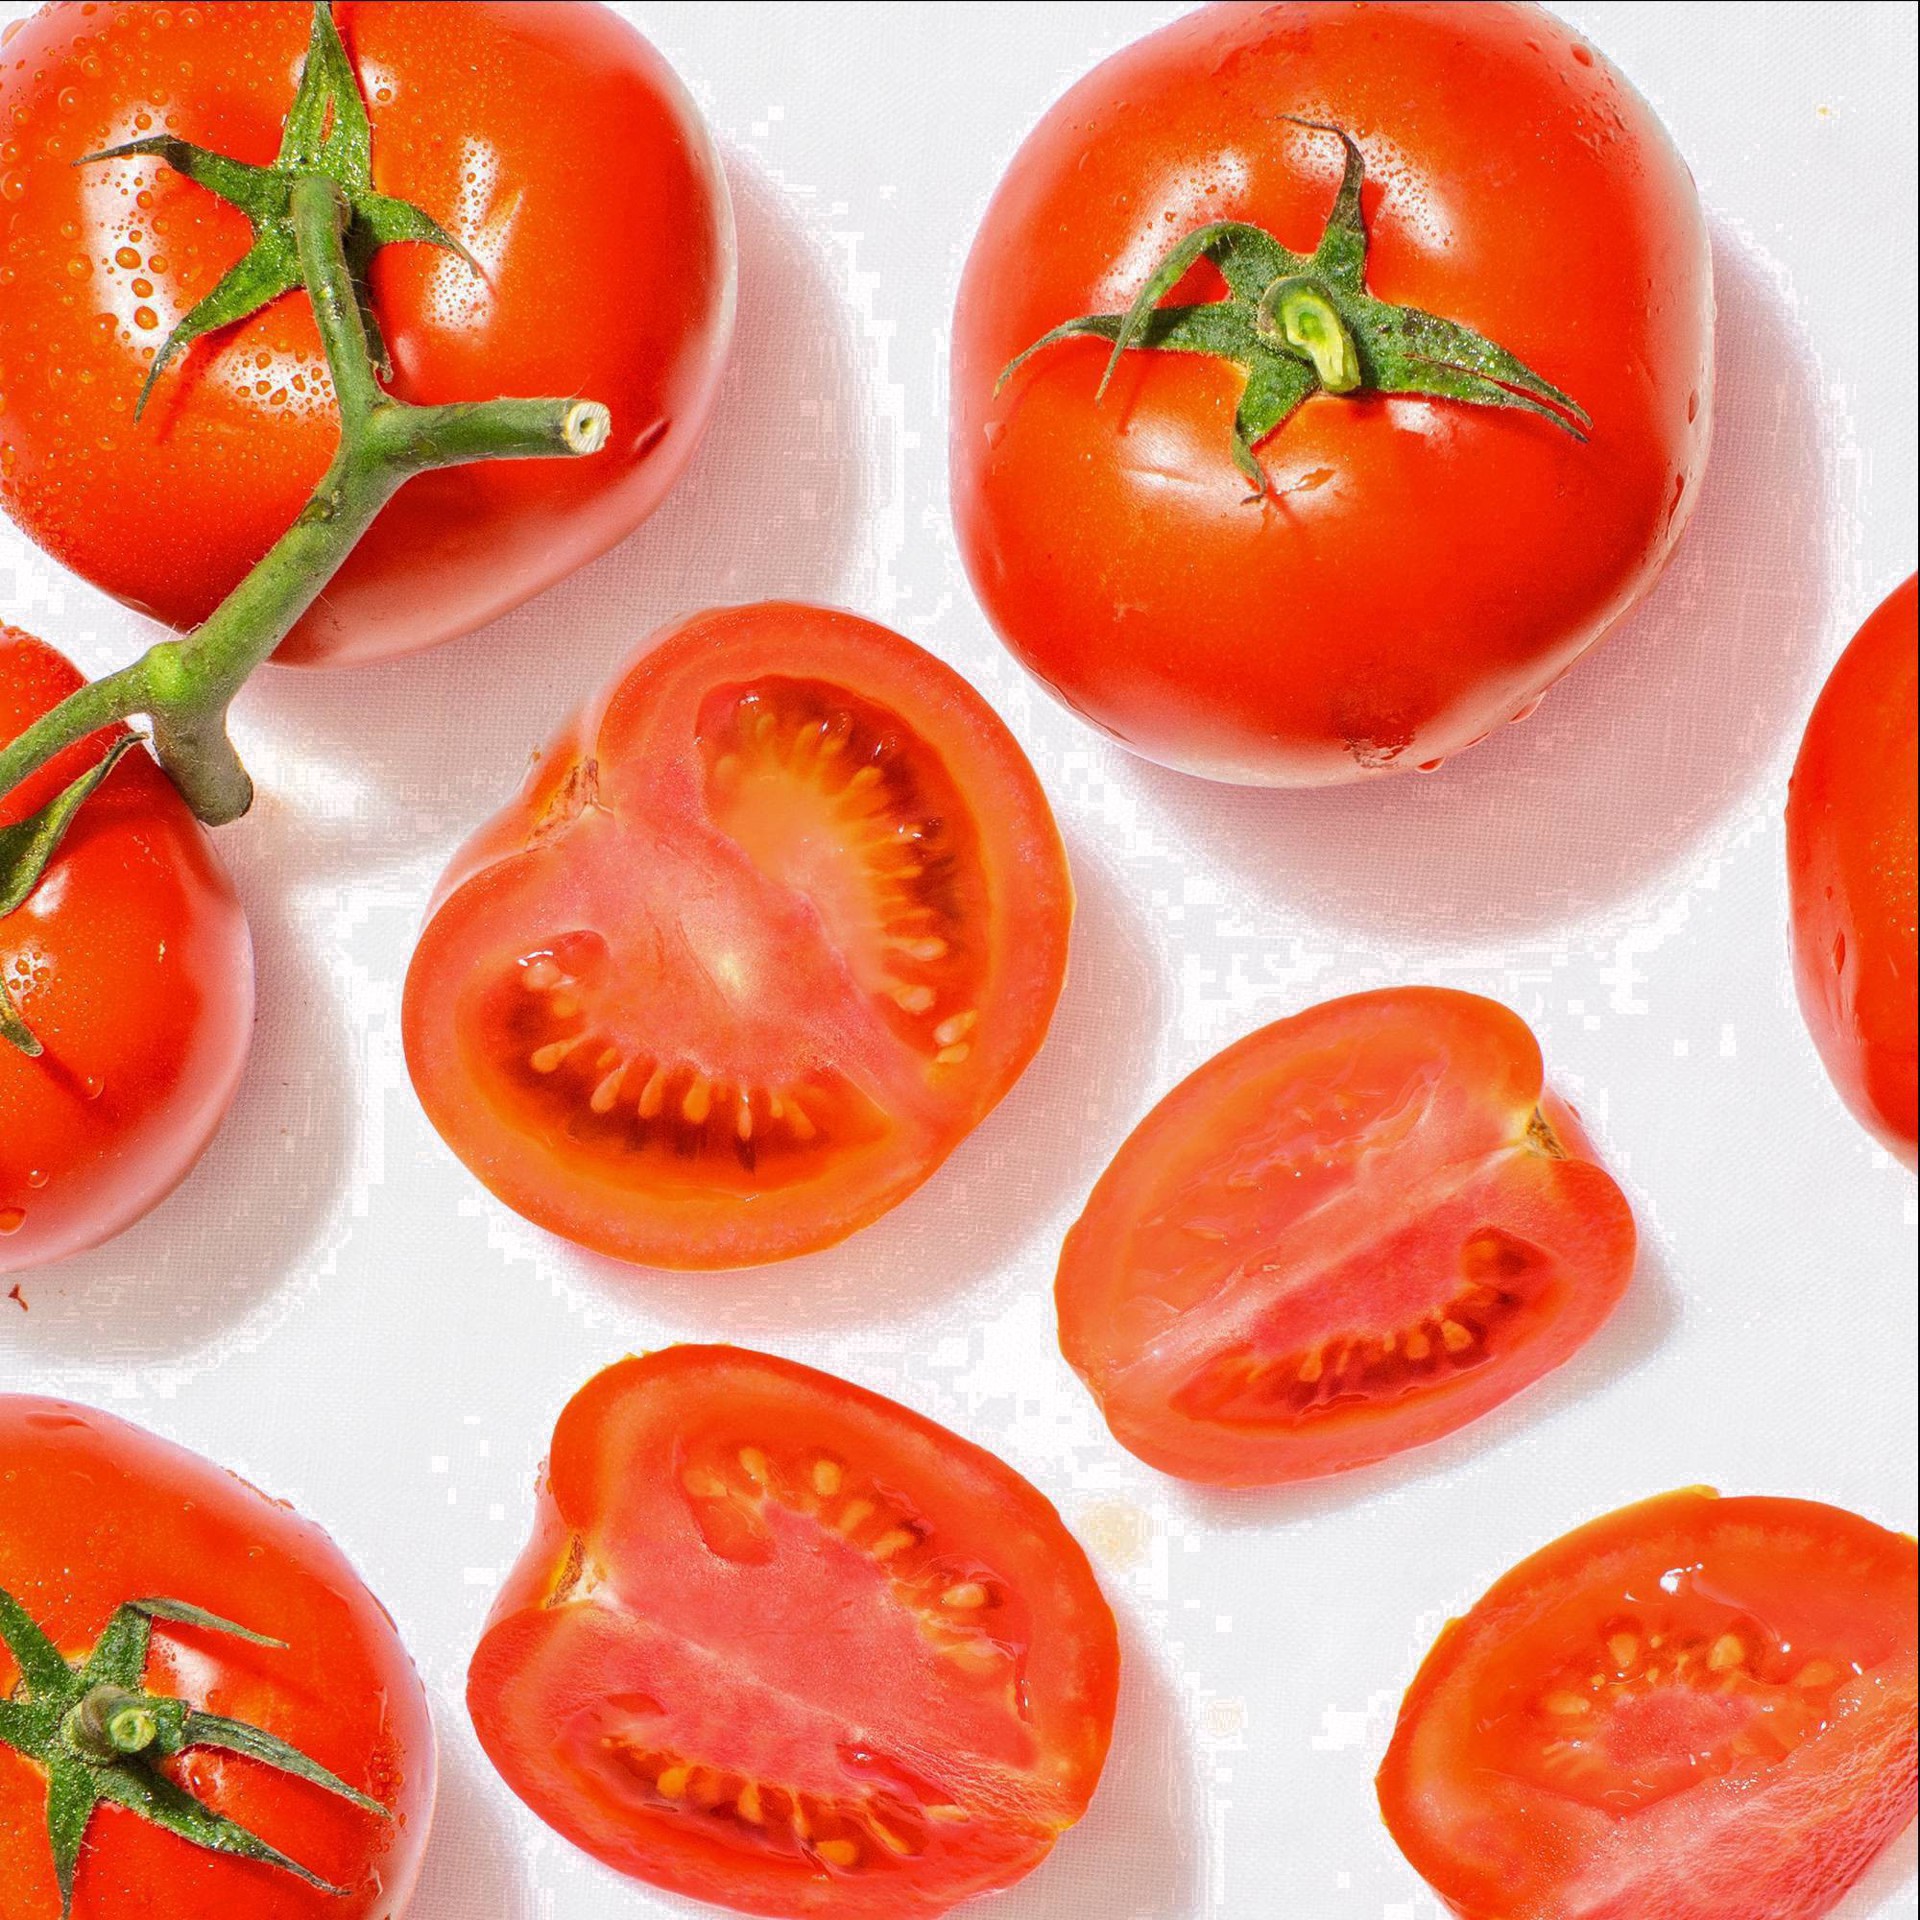 slide 7 of 85, Rao's Homemade Marinara Sauce | 24 oz | All Purpose Tomato Sauce | Pasta Sauce | Carb Conscious, Keto Friendly | All Natural, Premium Quality | With Italian Tomatoes & Olive Oil, 24 oz